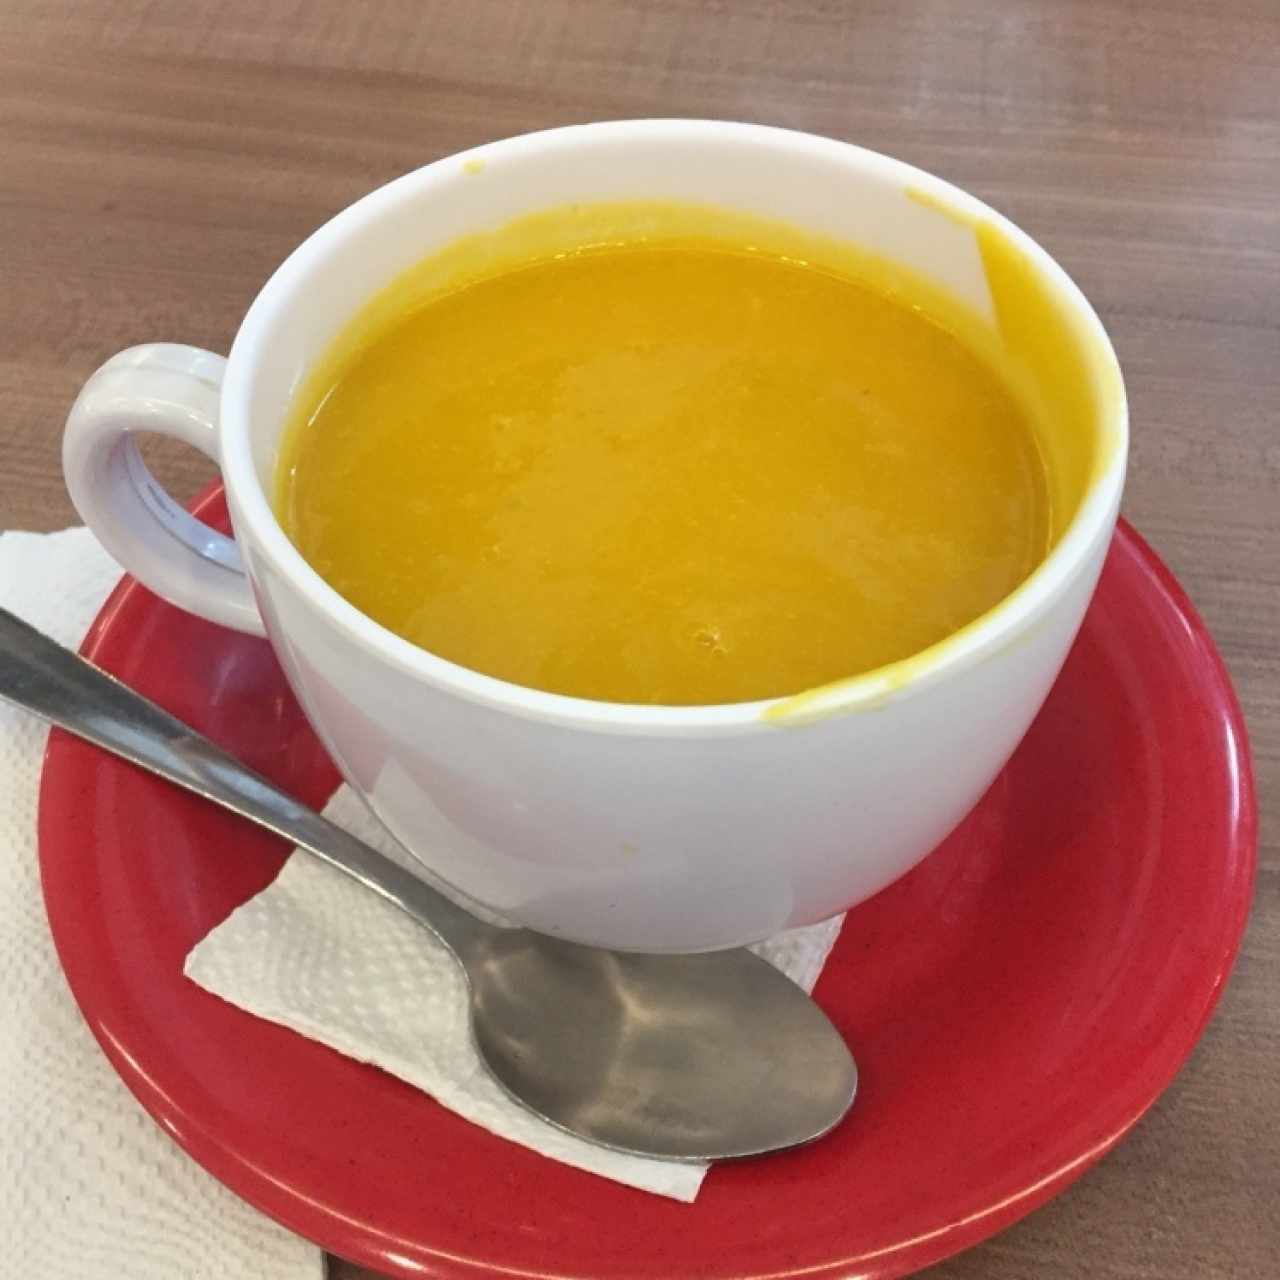 Sopa de Zapallo